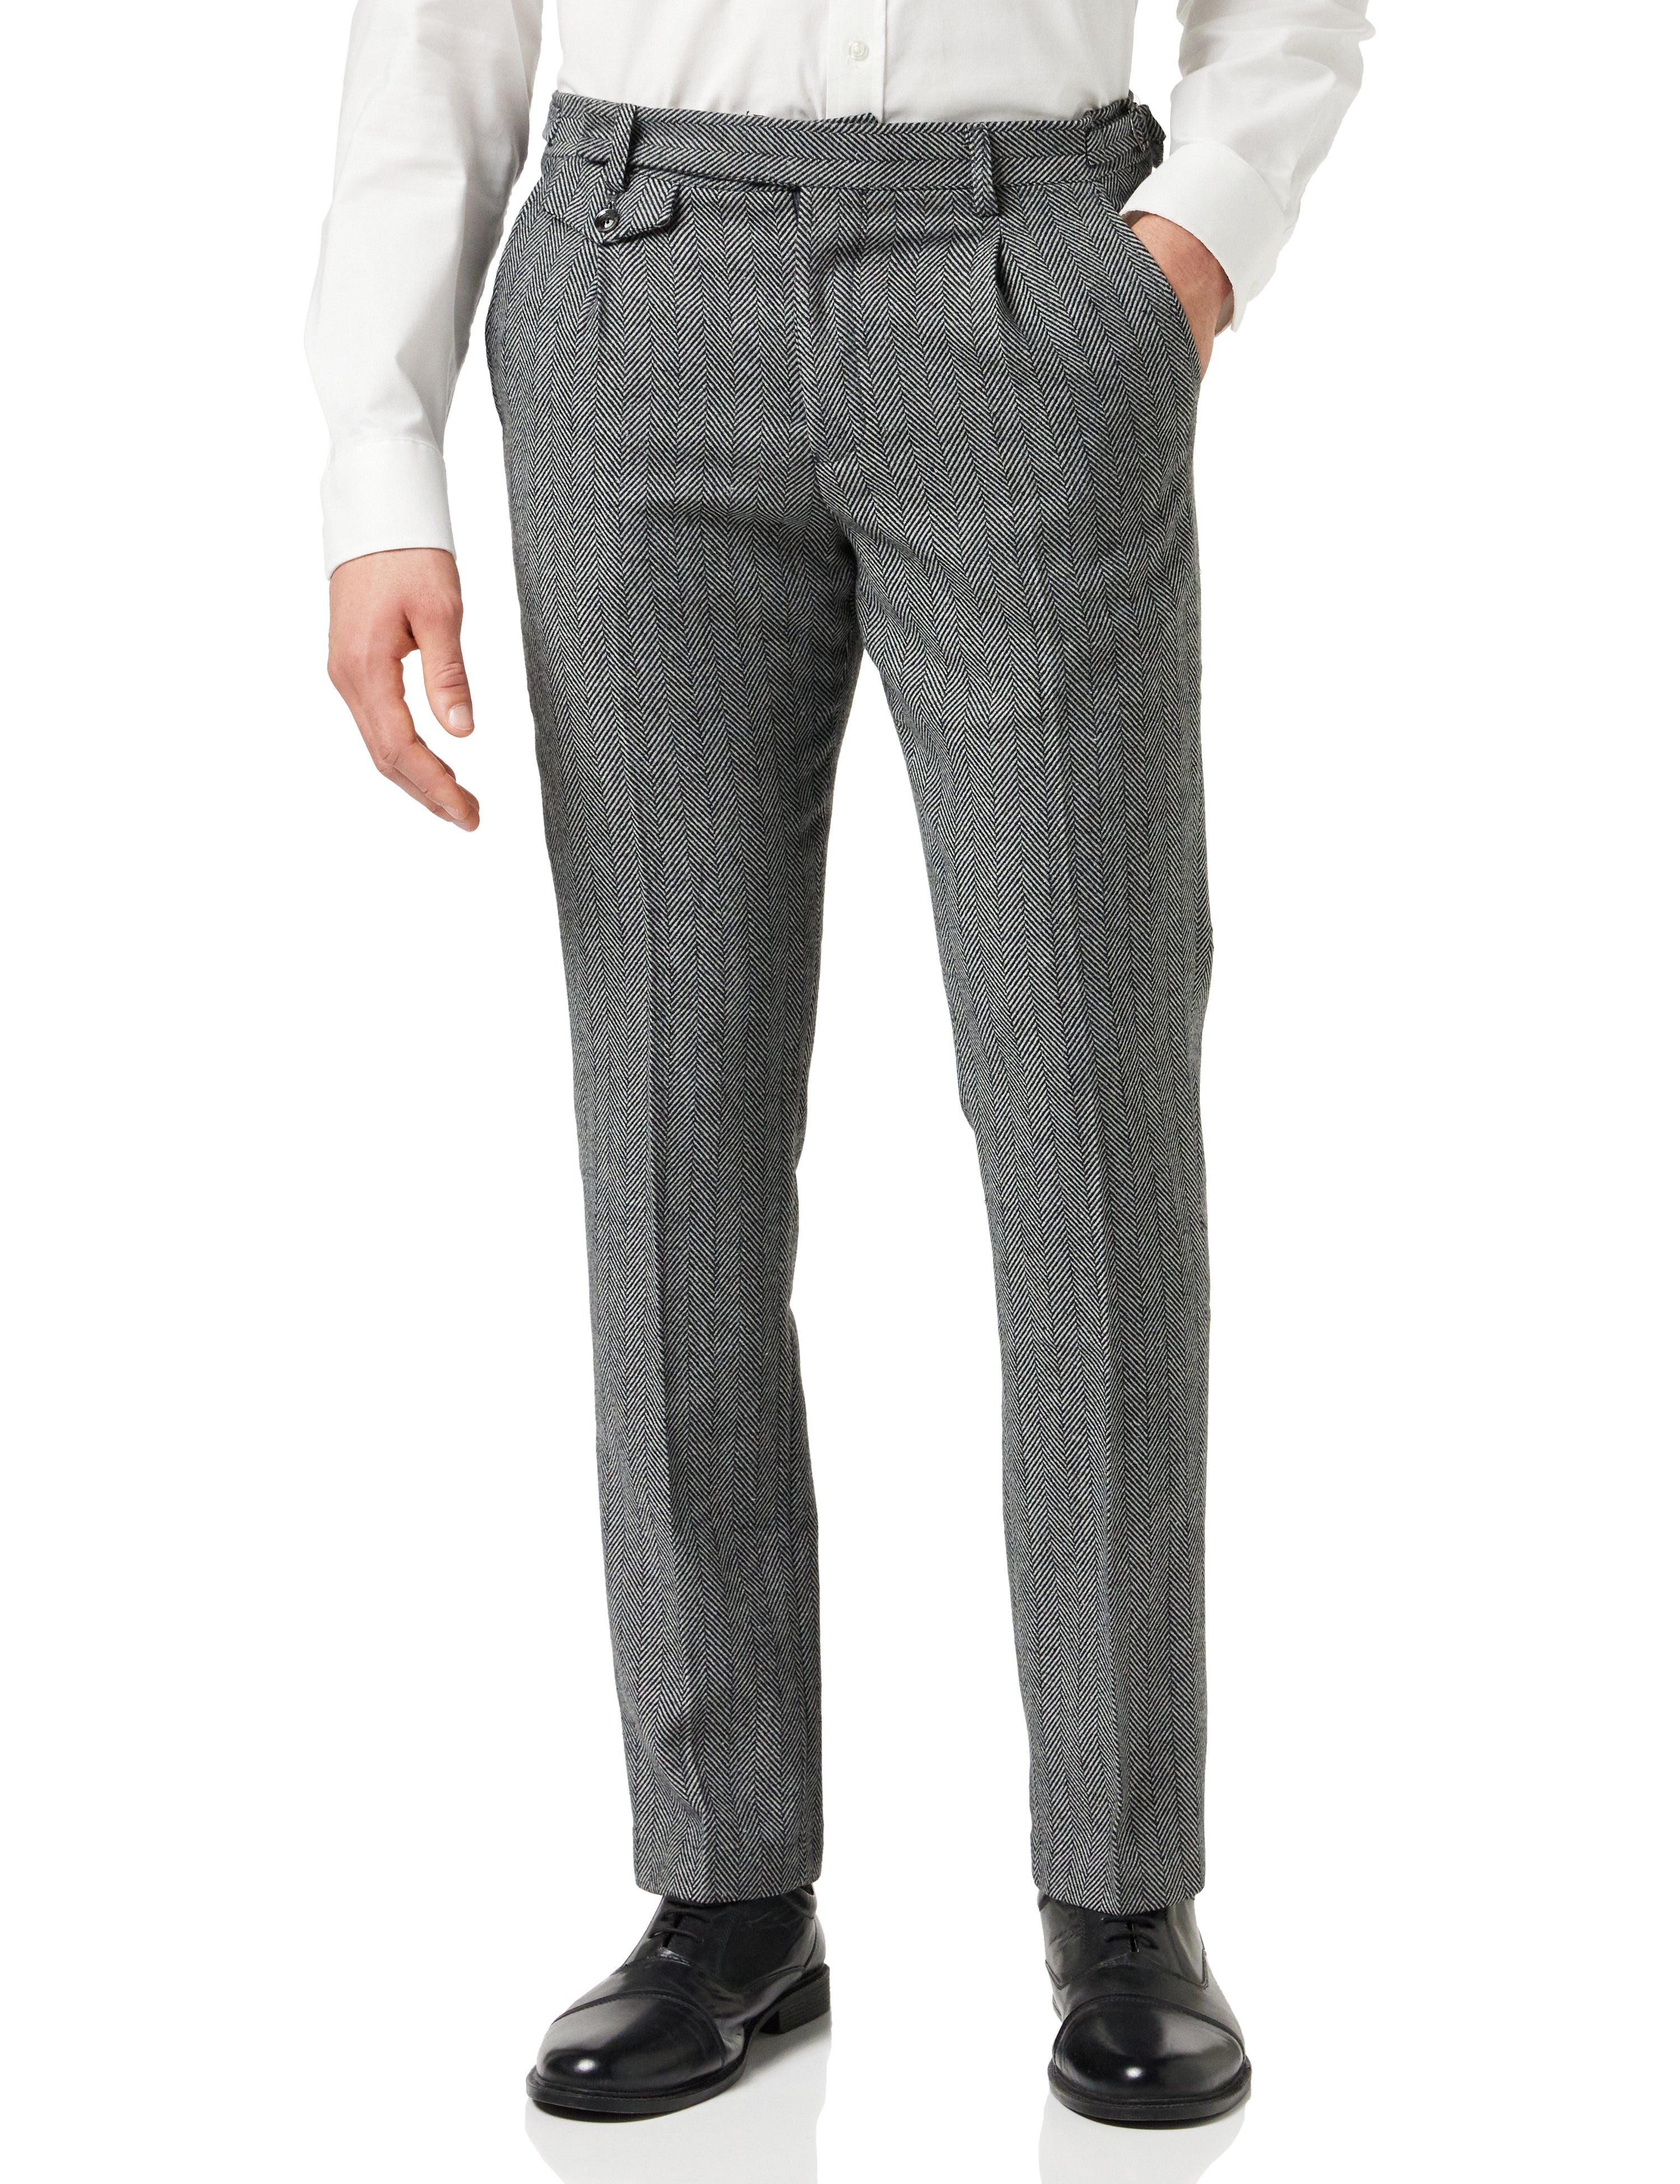 Trousers  Wide dark breen tweed trousers Buy from eshop